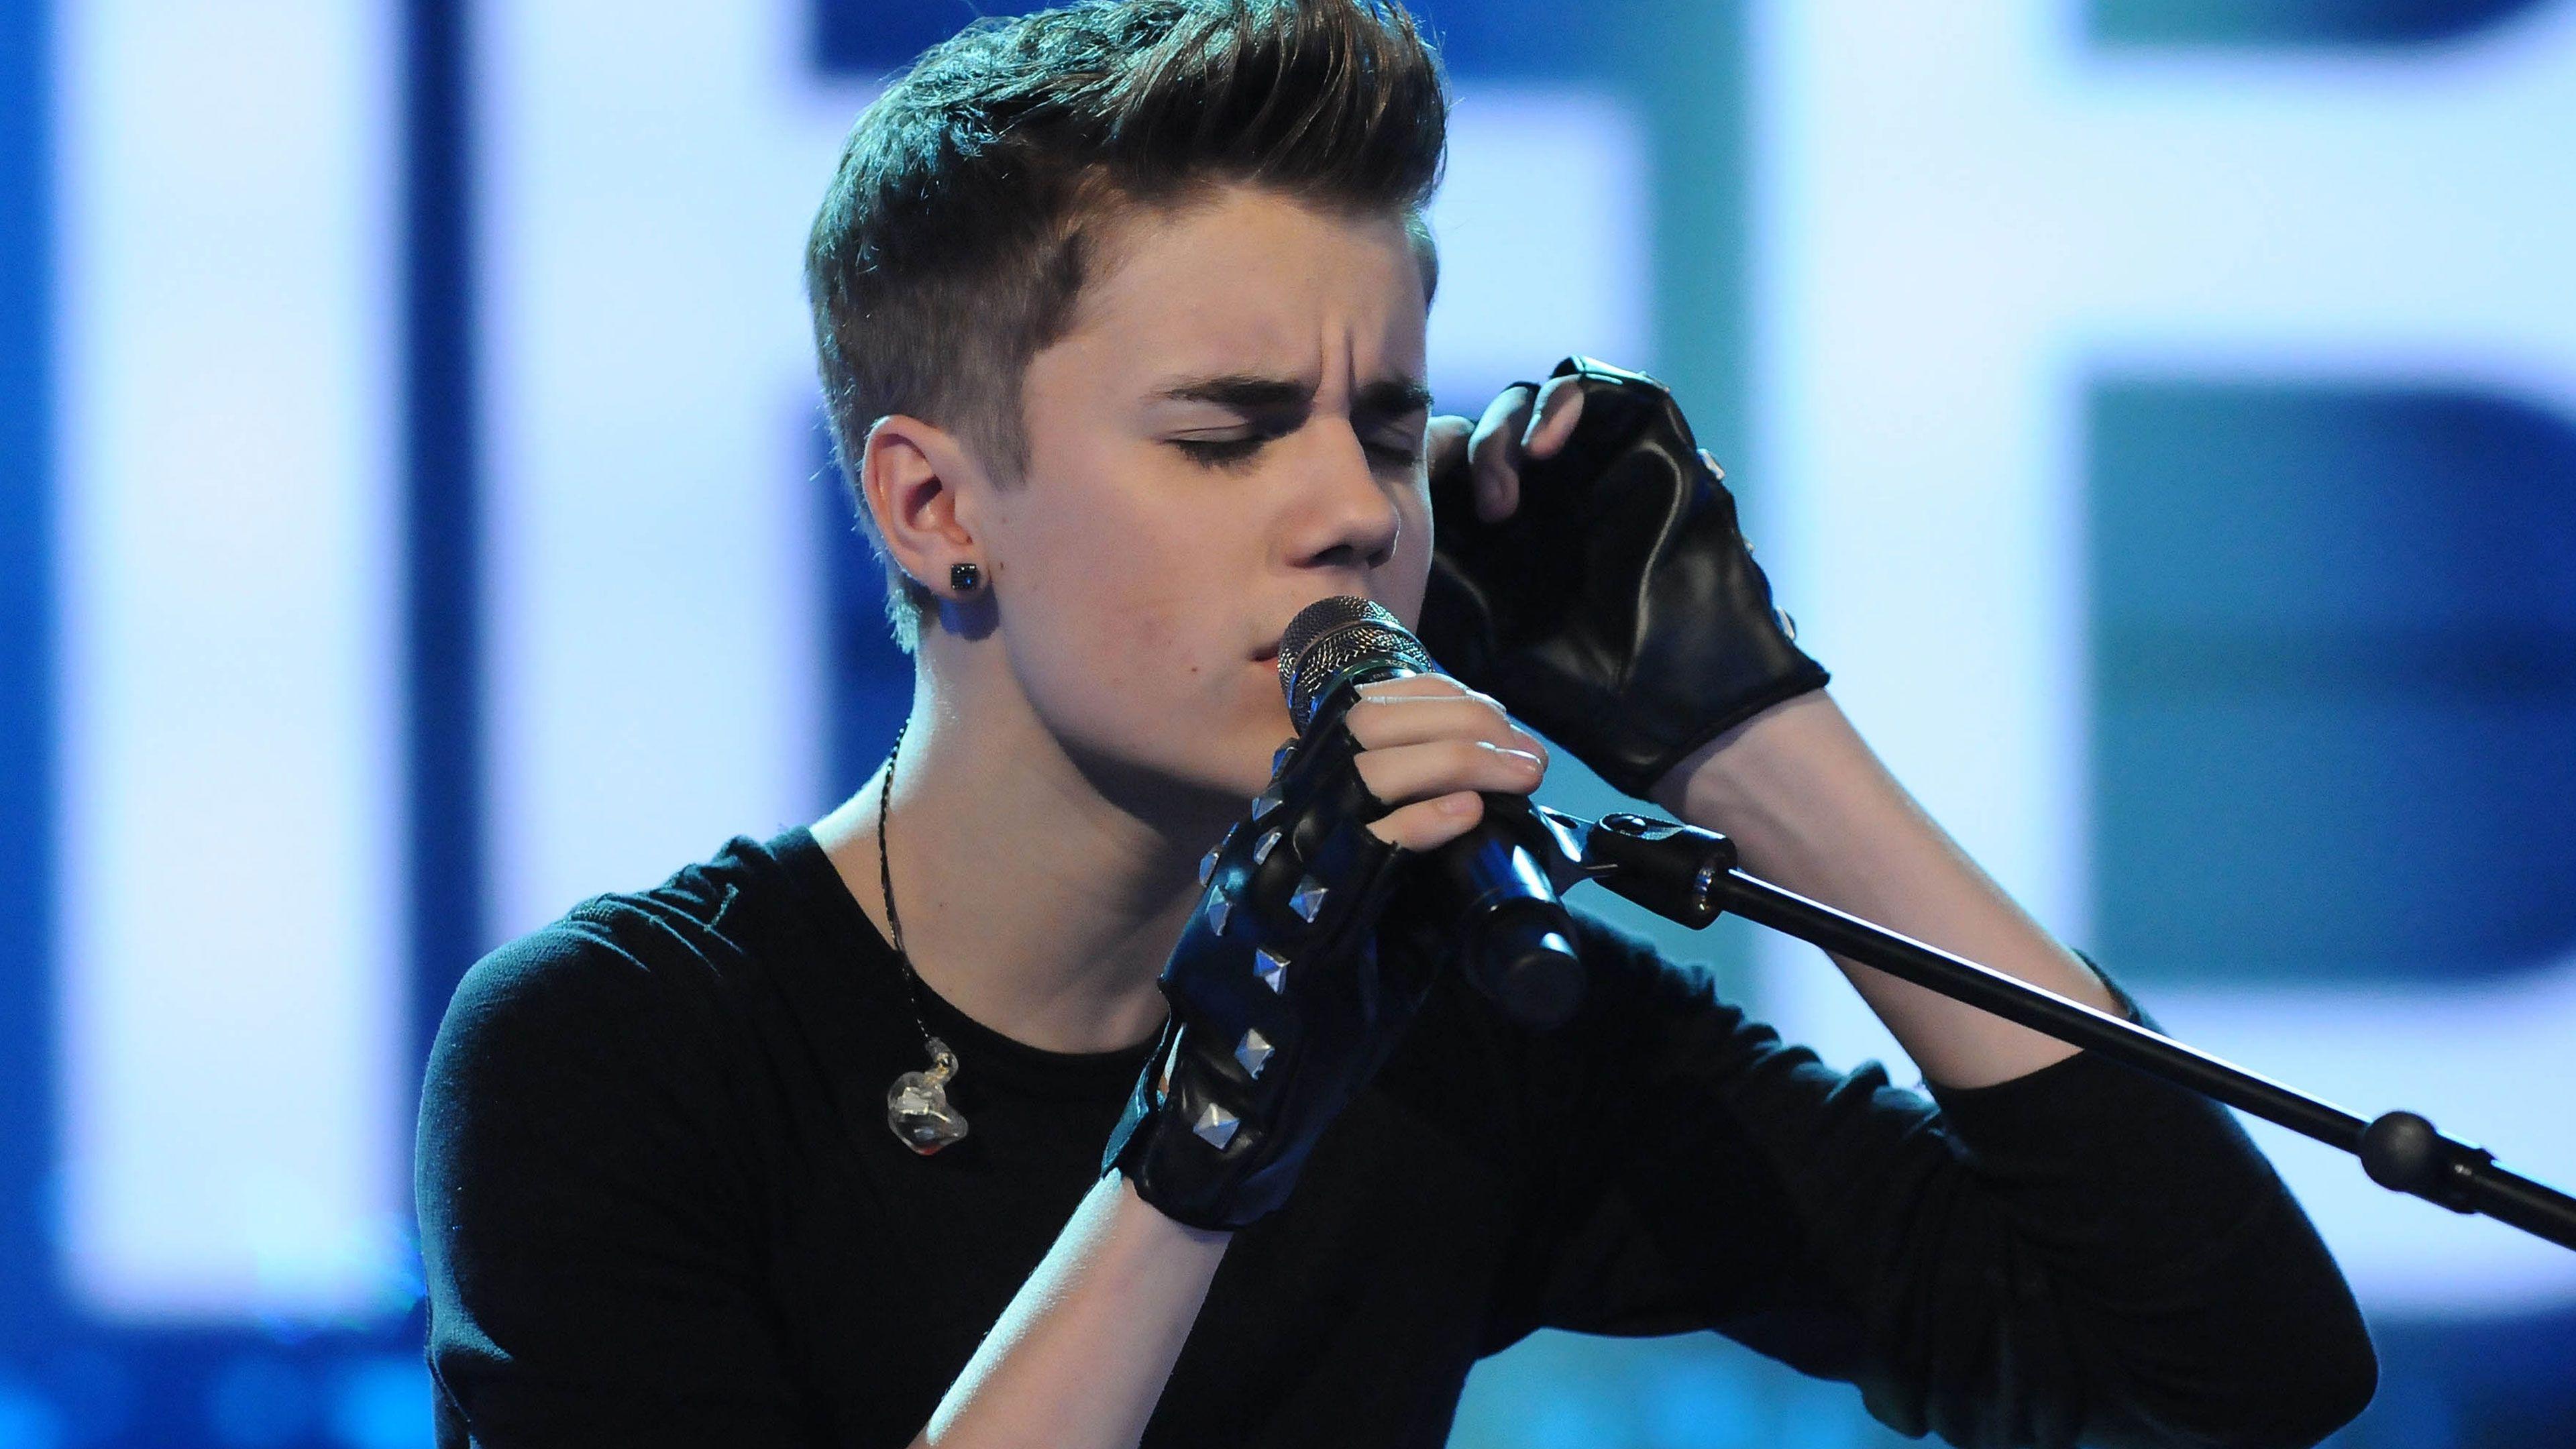 Justin Bieber Singing Live 16 9 Ultra HD, UHD